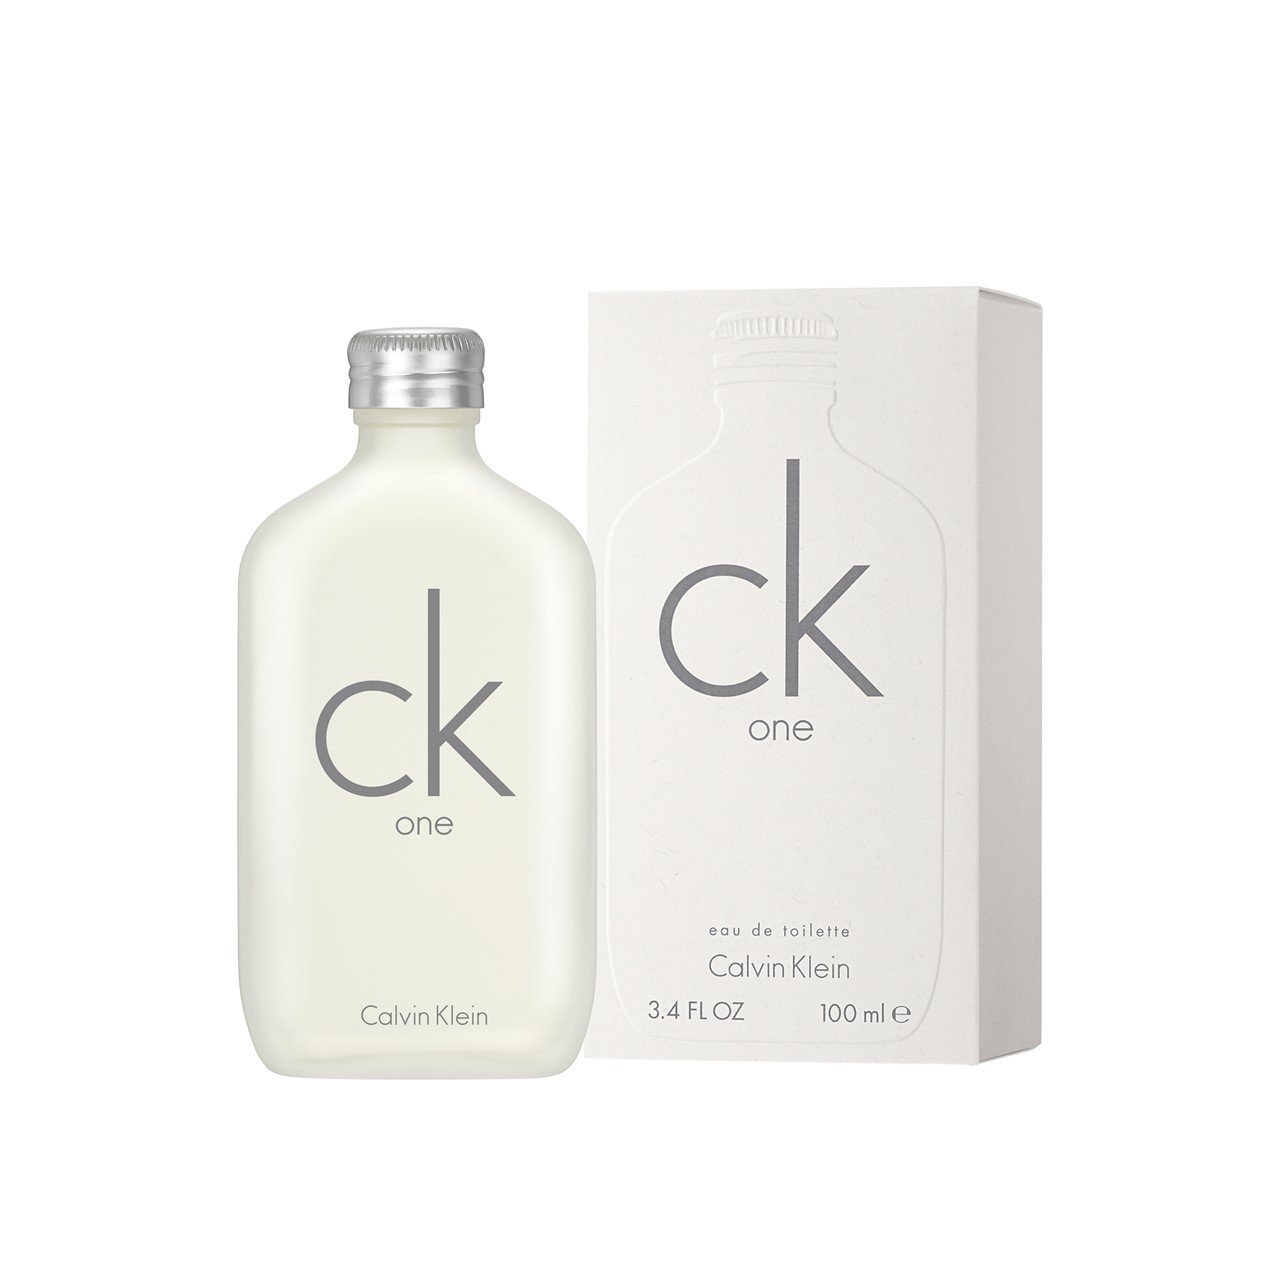 Buy Calvin Klein CK (3.4fl.oz.) Eau USA 100ml · Toilette de One